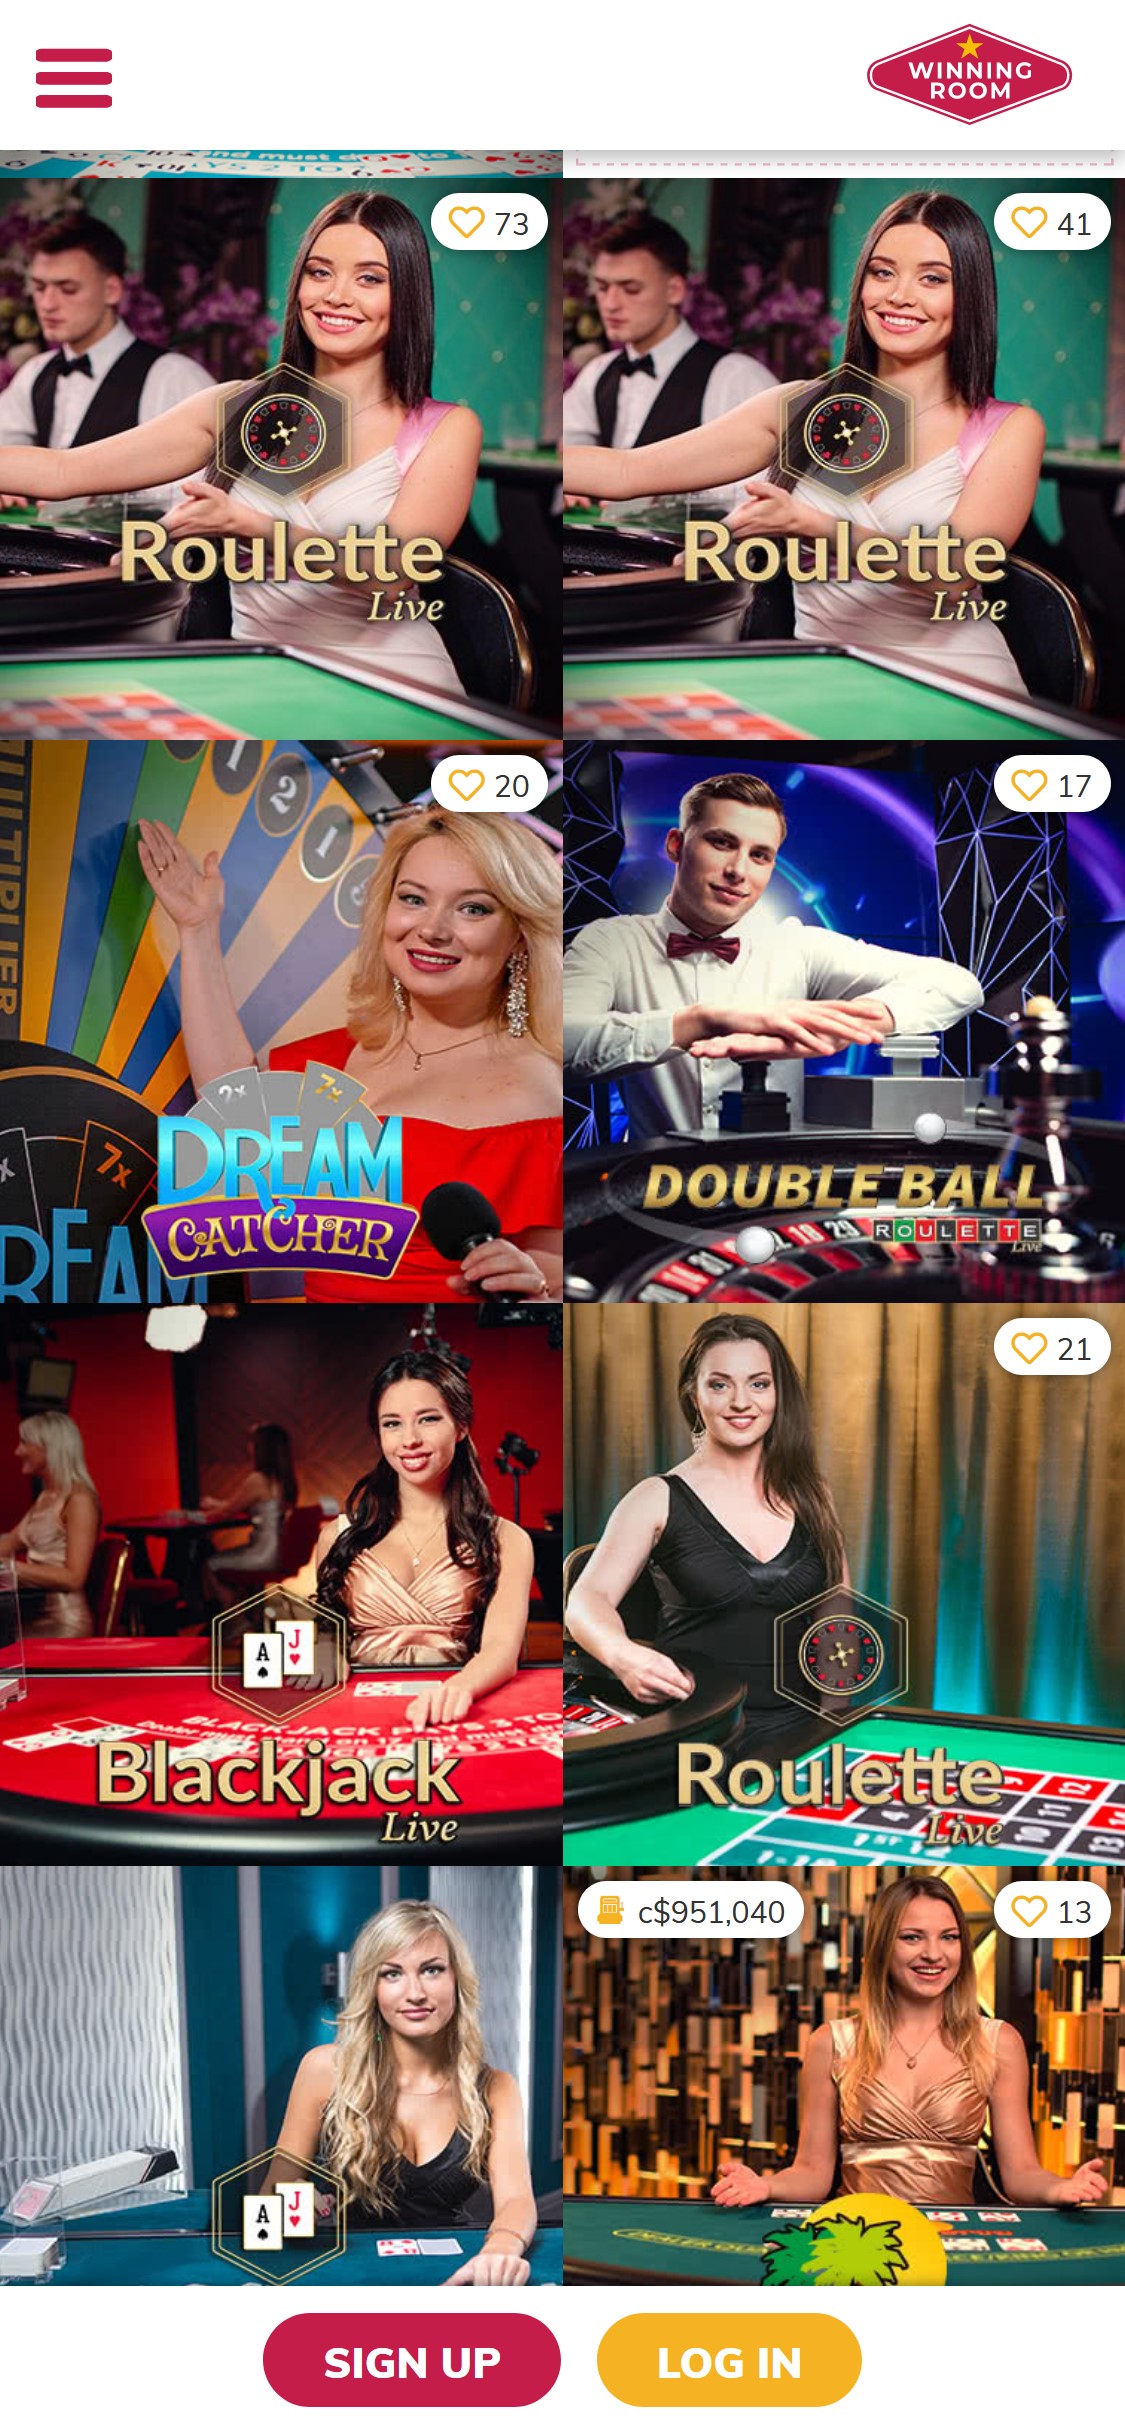 Winning Room Casino Mobile Live Dealer Games Review